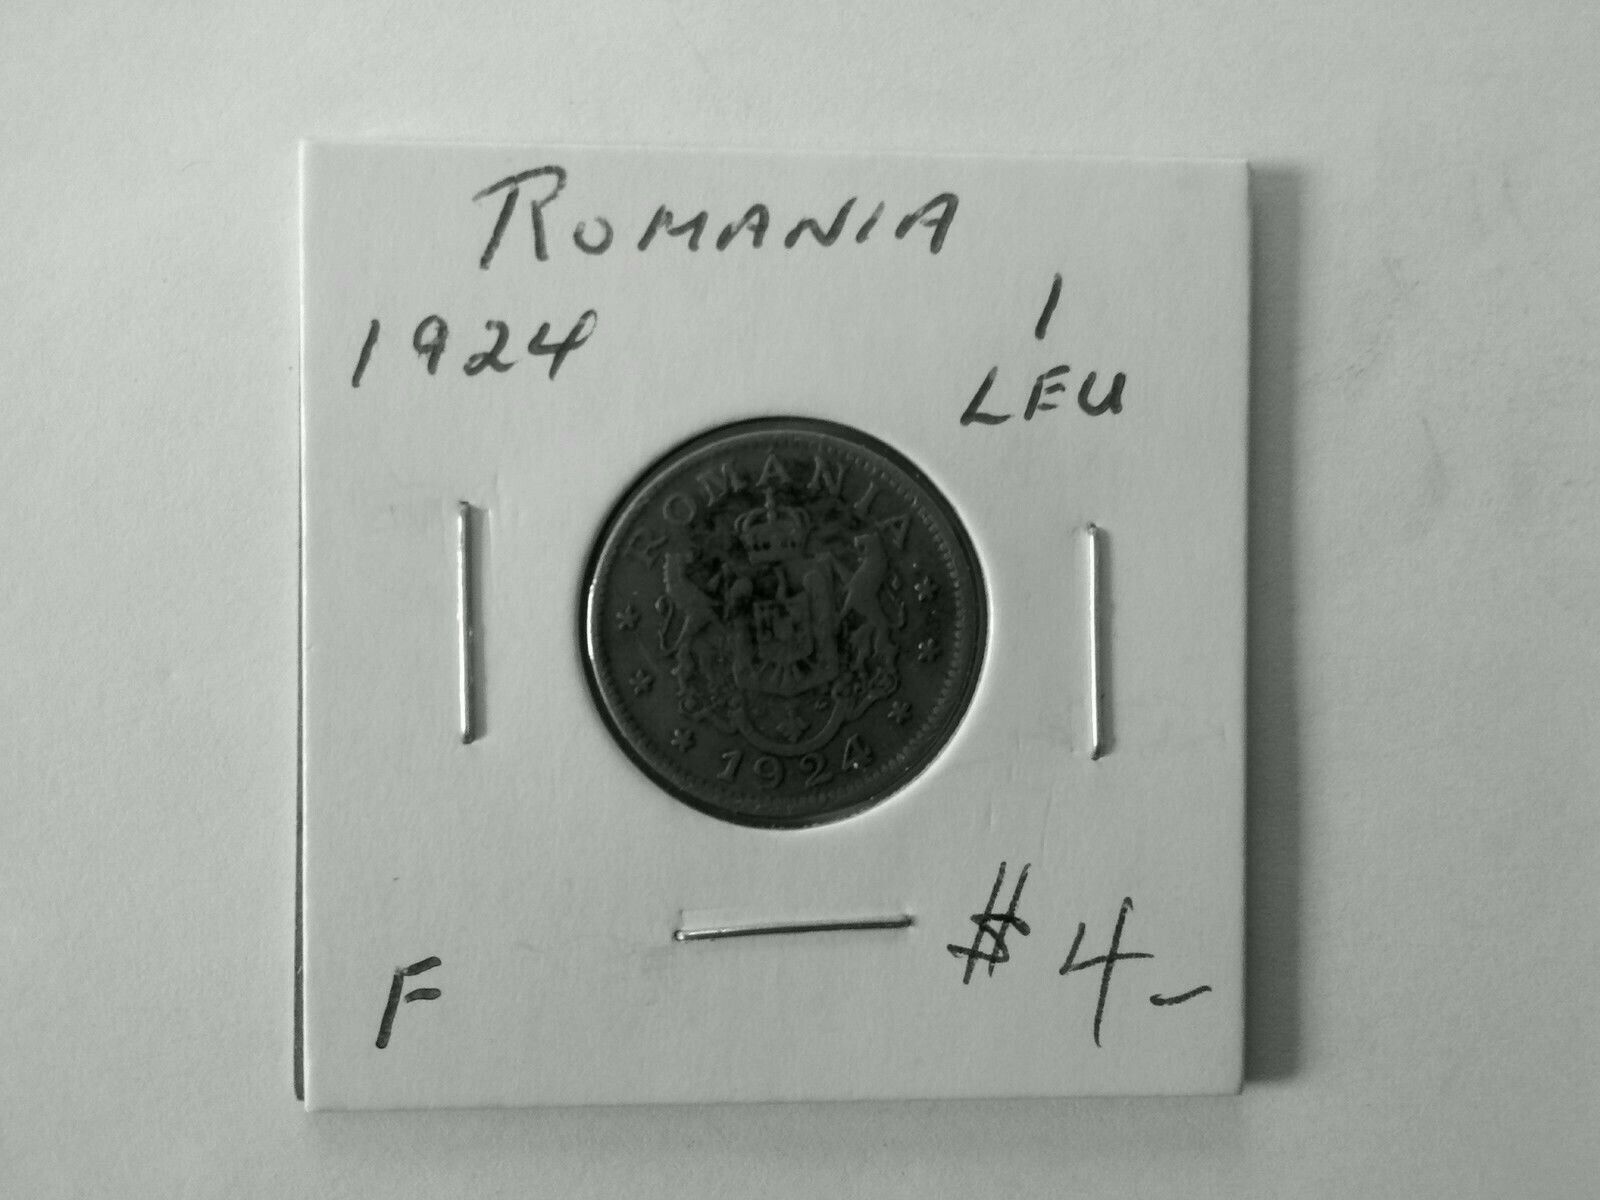 Romania 1924 1 Leu